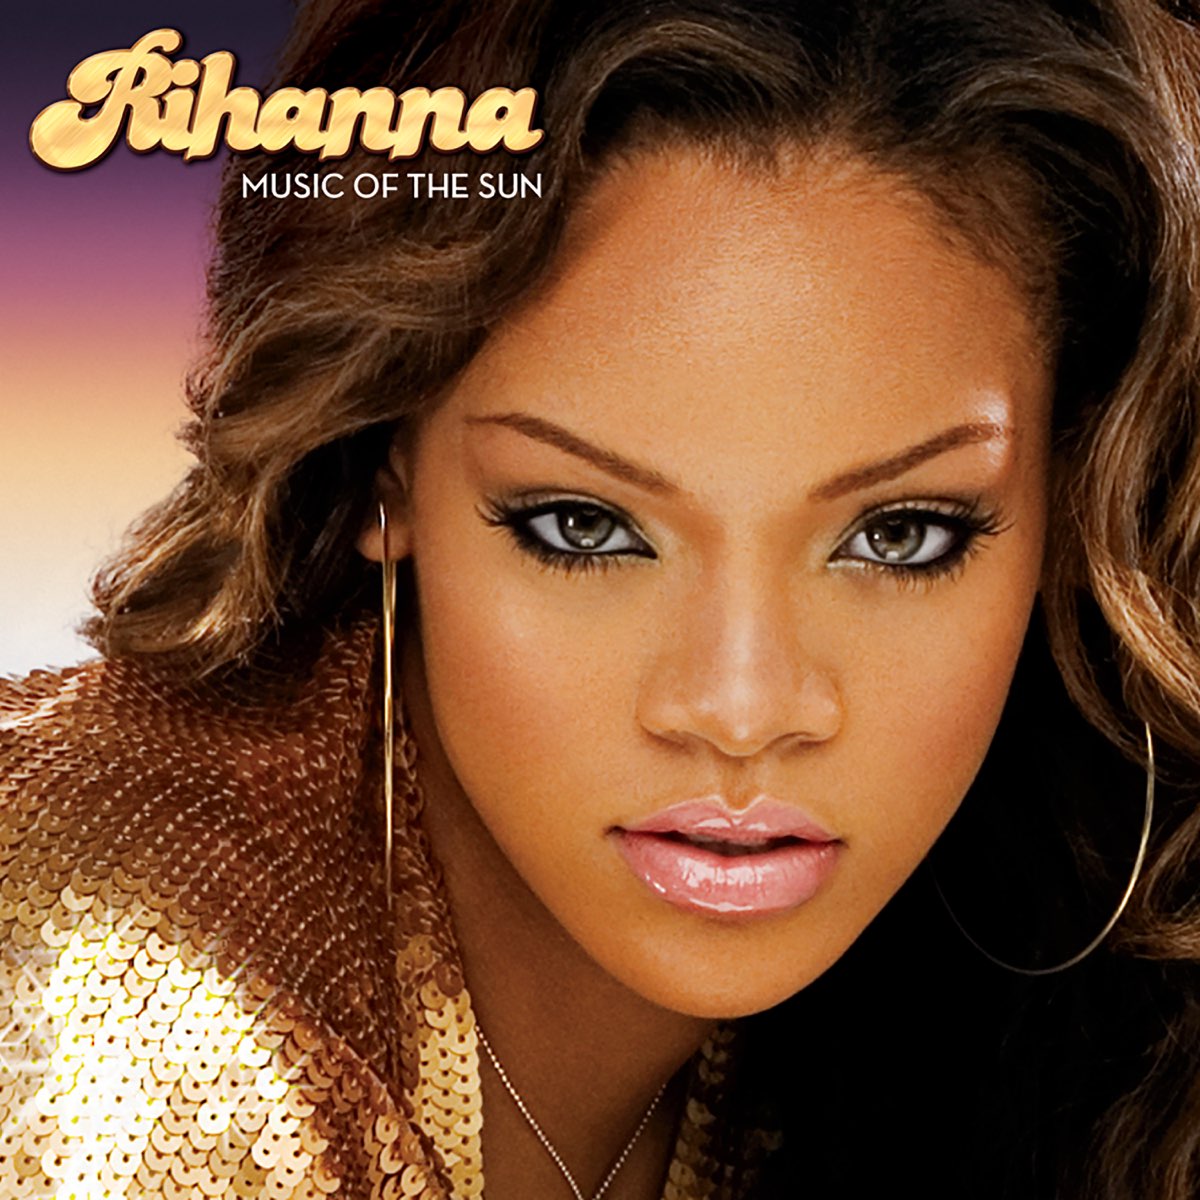 ‎Music of the Sun - Album by Rihanna - Apple Music